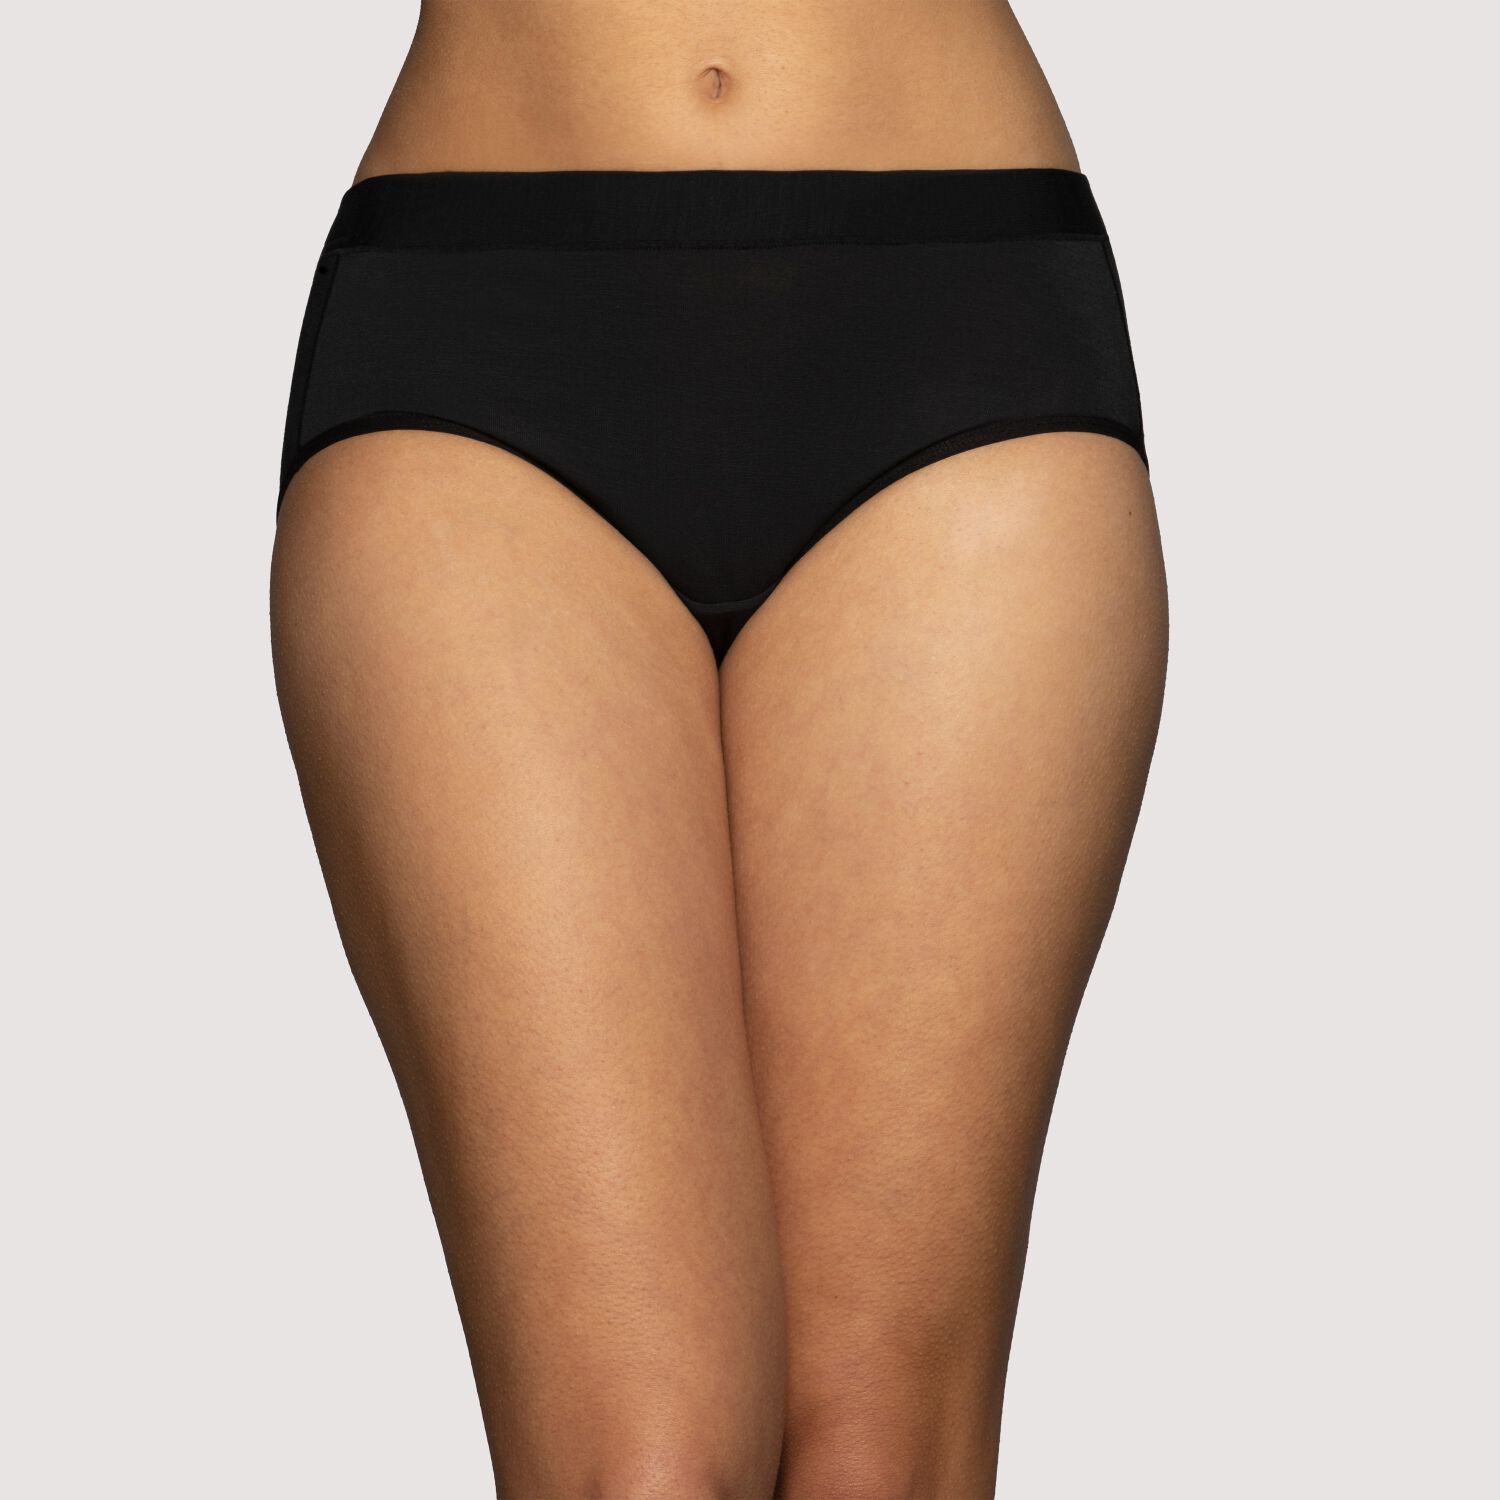 Kindly Yours Women's Comfort Modal Bikini Underwear, 2-Pack